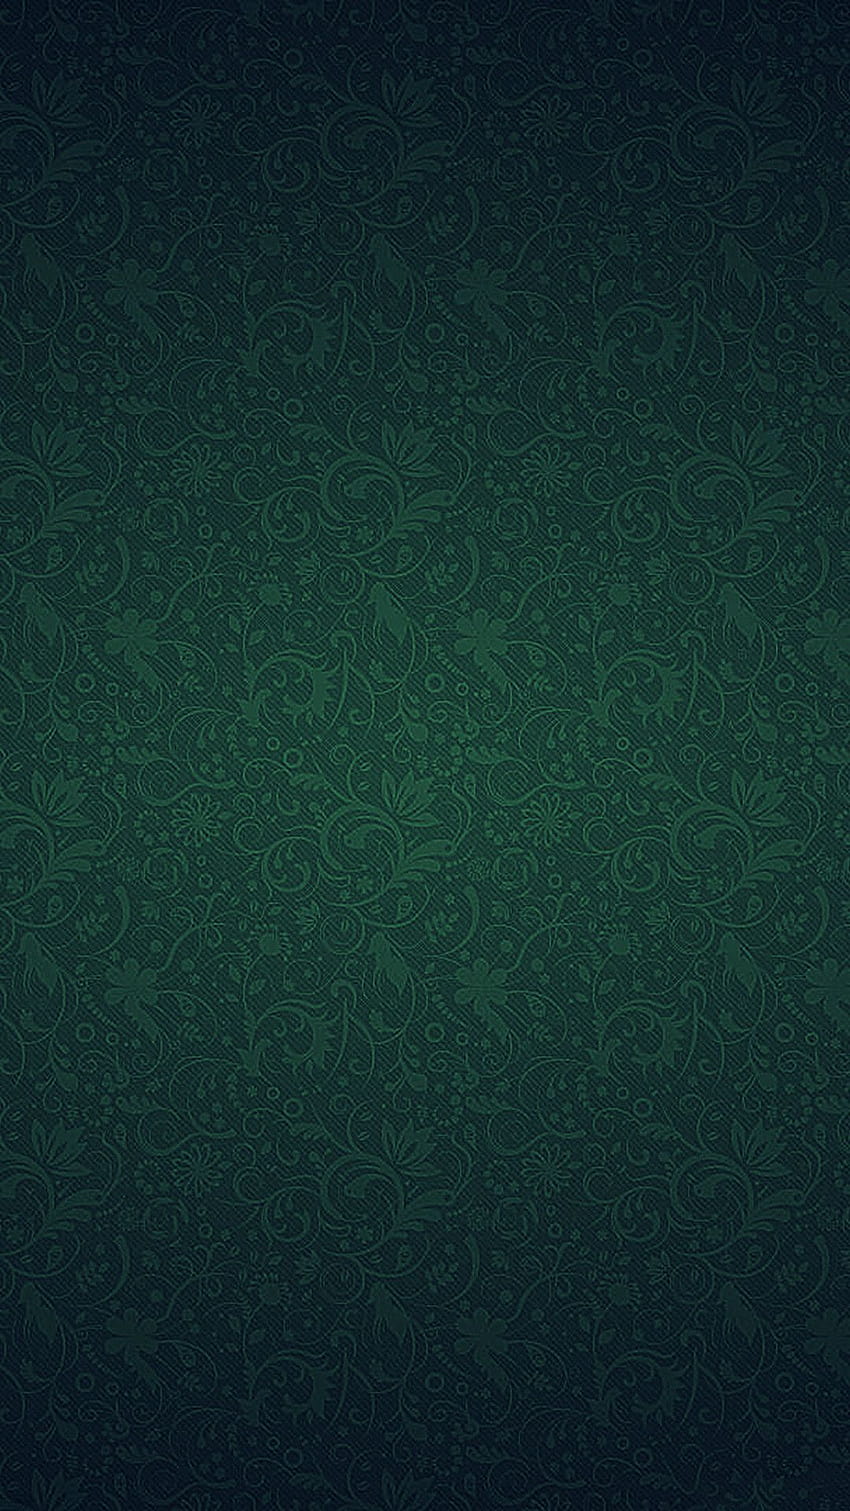 1080x1920 Patrón de textura de ornamento verde, verde android amoled fondo de pantalla del teléfono